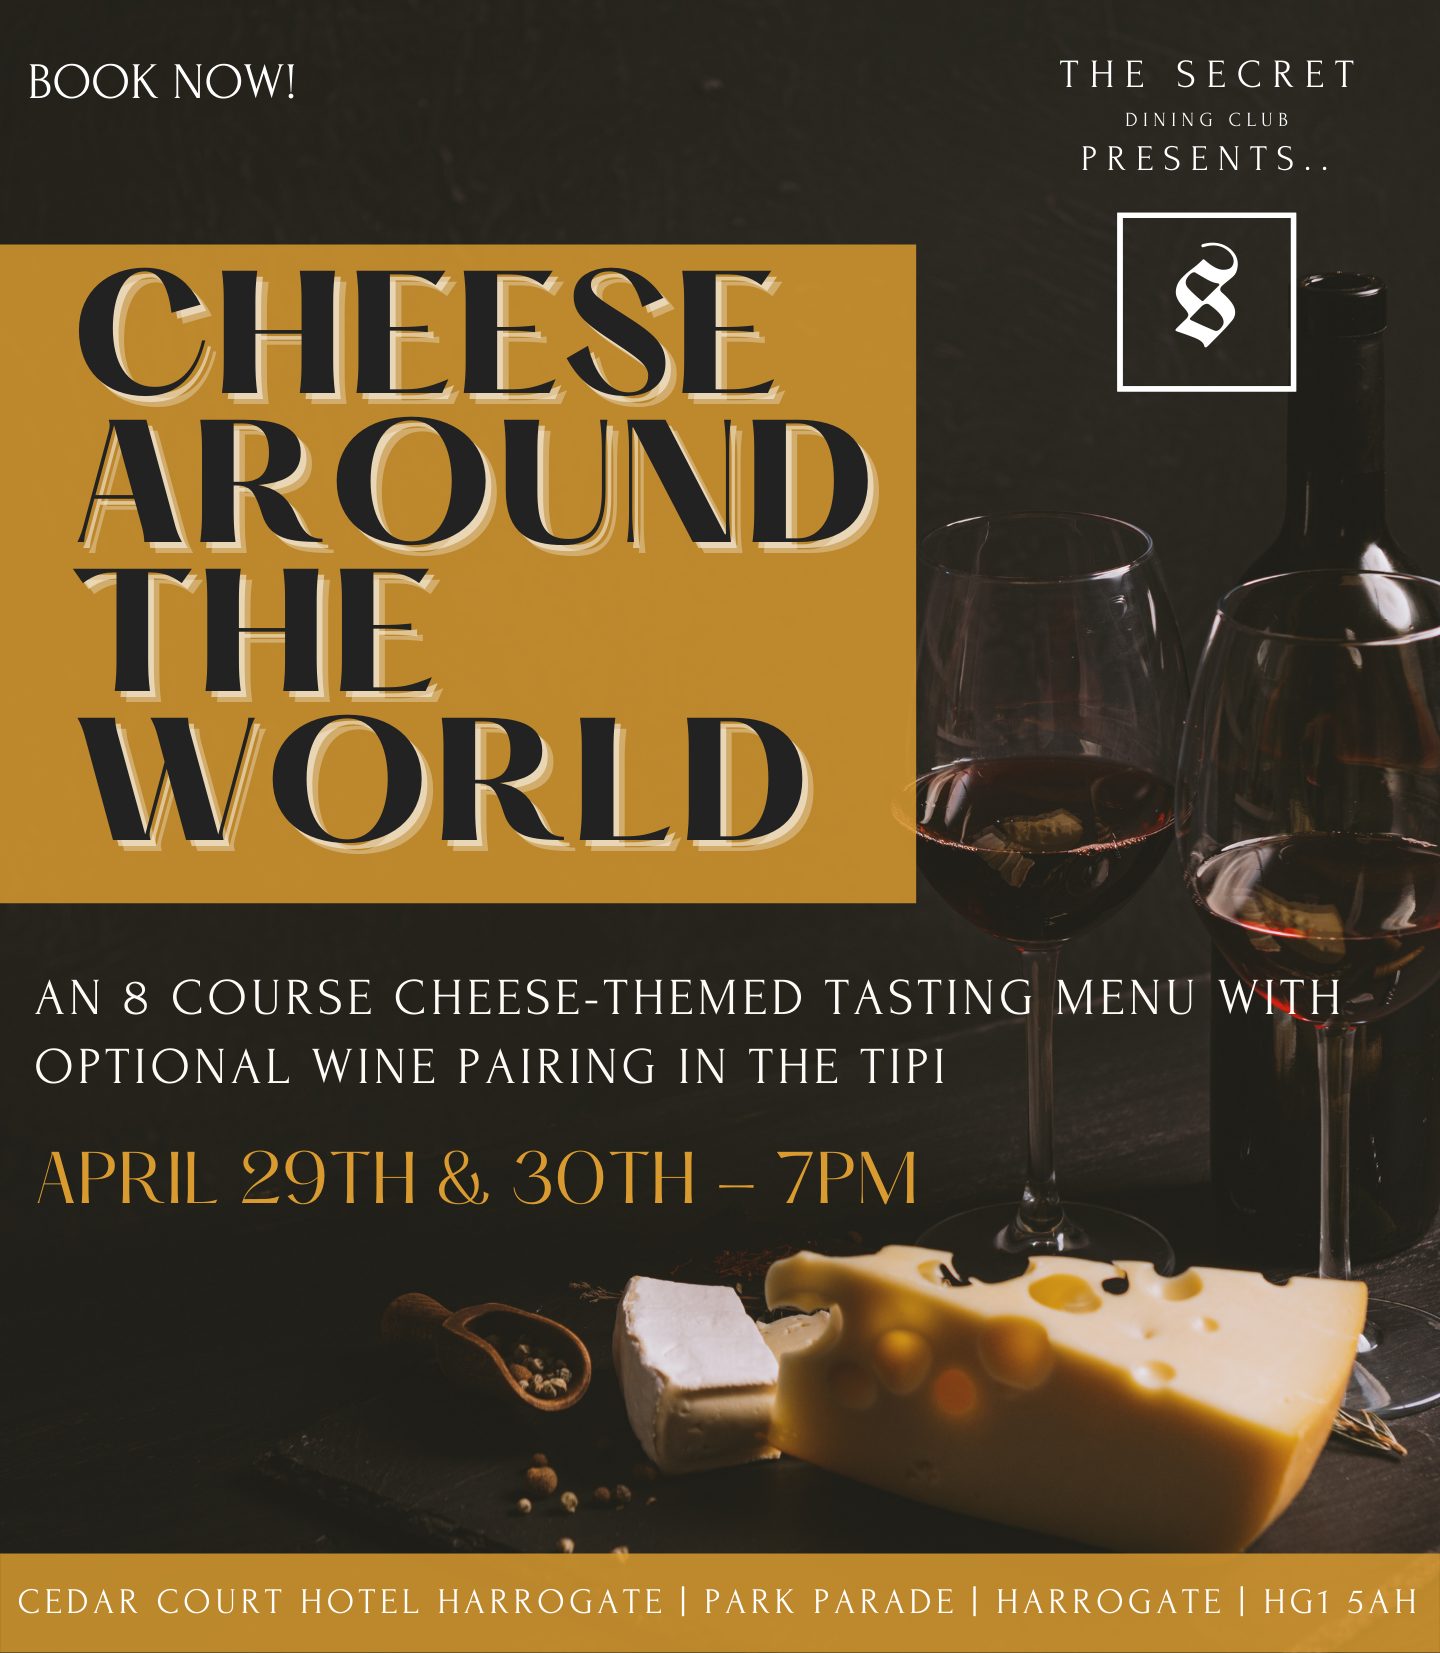 Cheese Around The World - 8 Course tasting menu